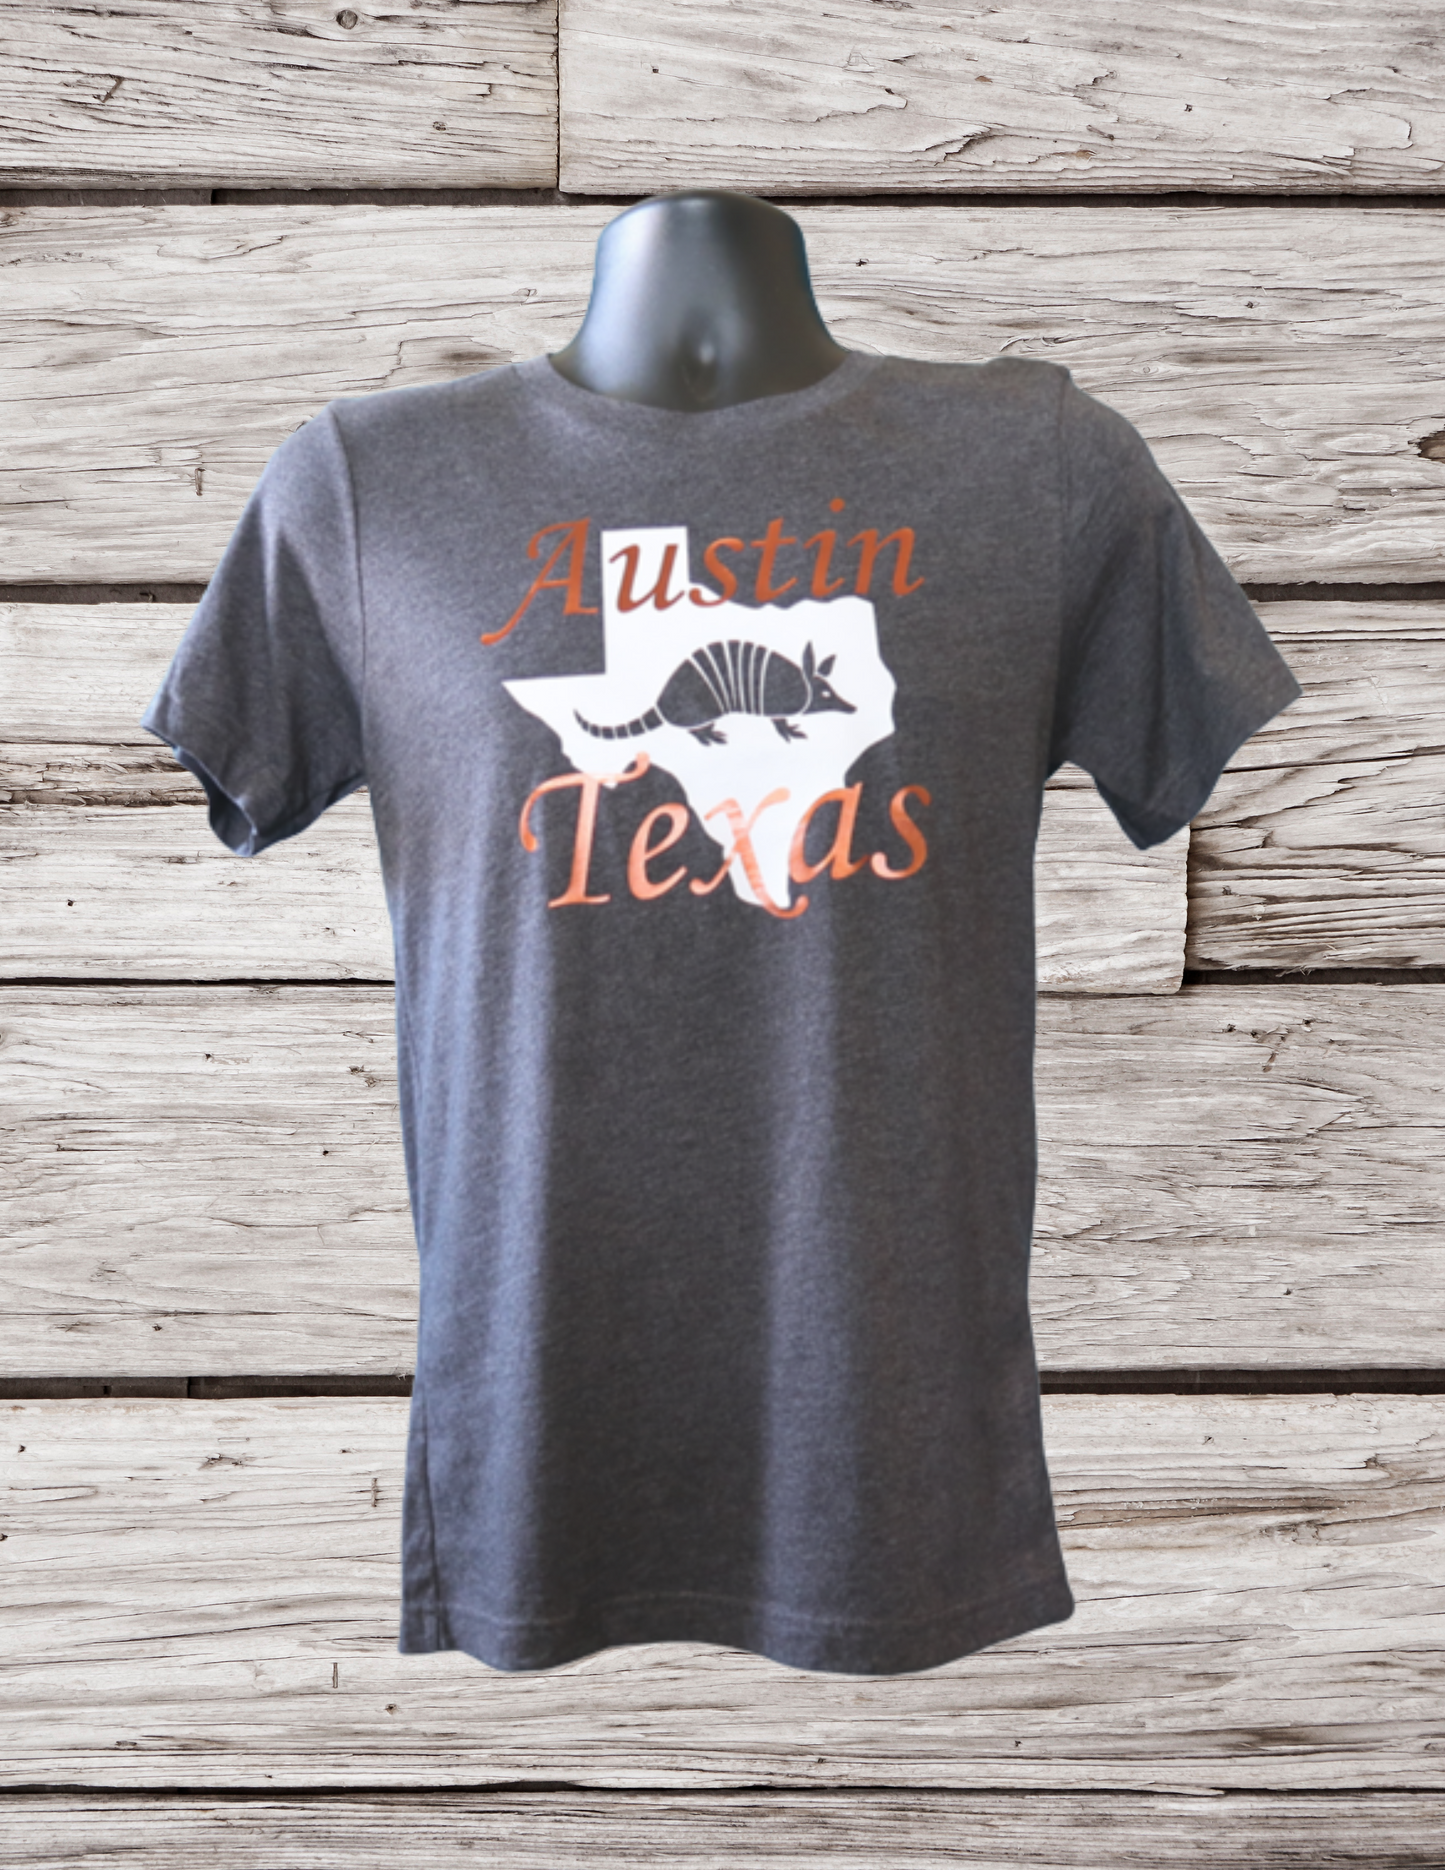 Austin Texas - Adult Unisex T-shirt